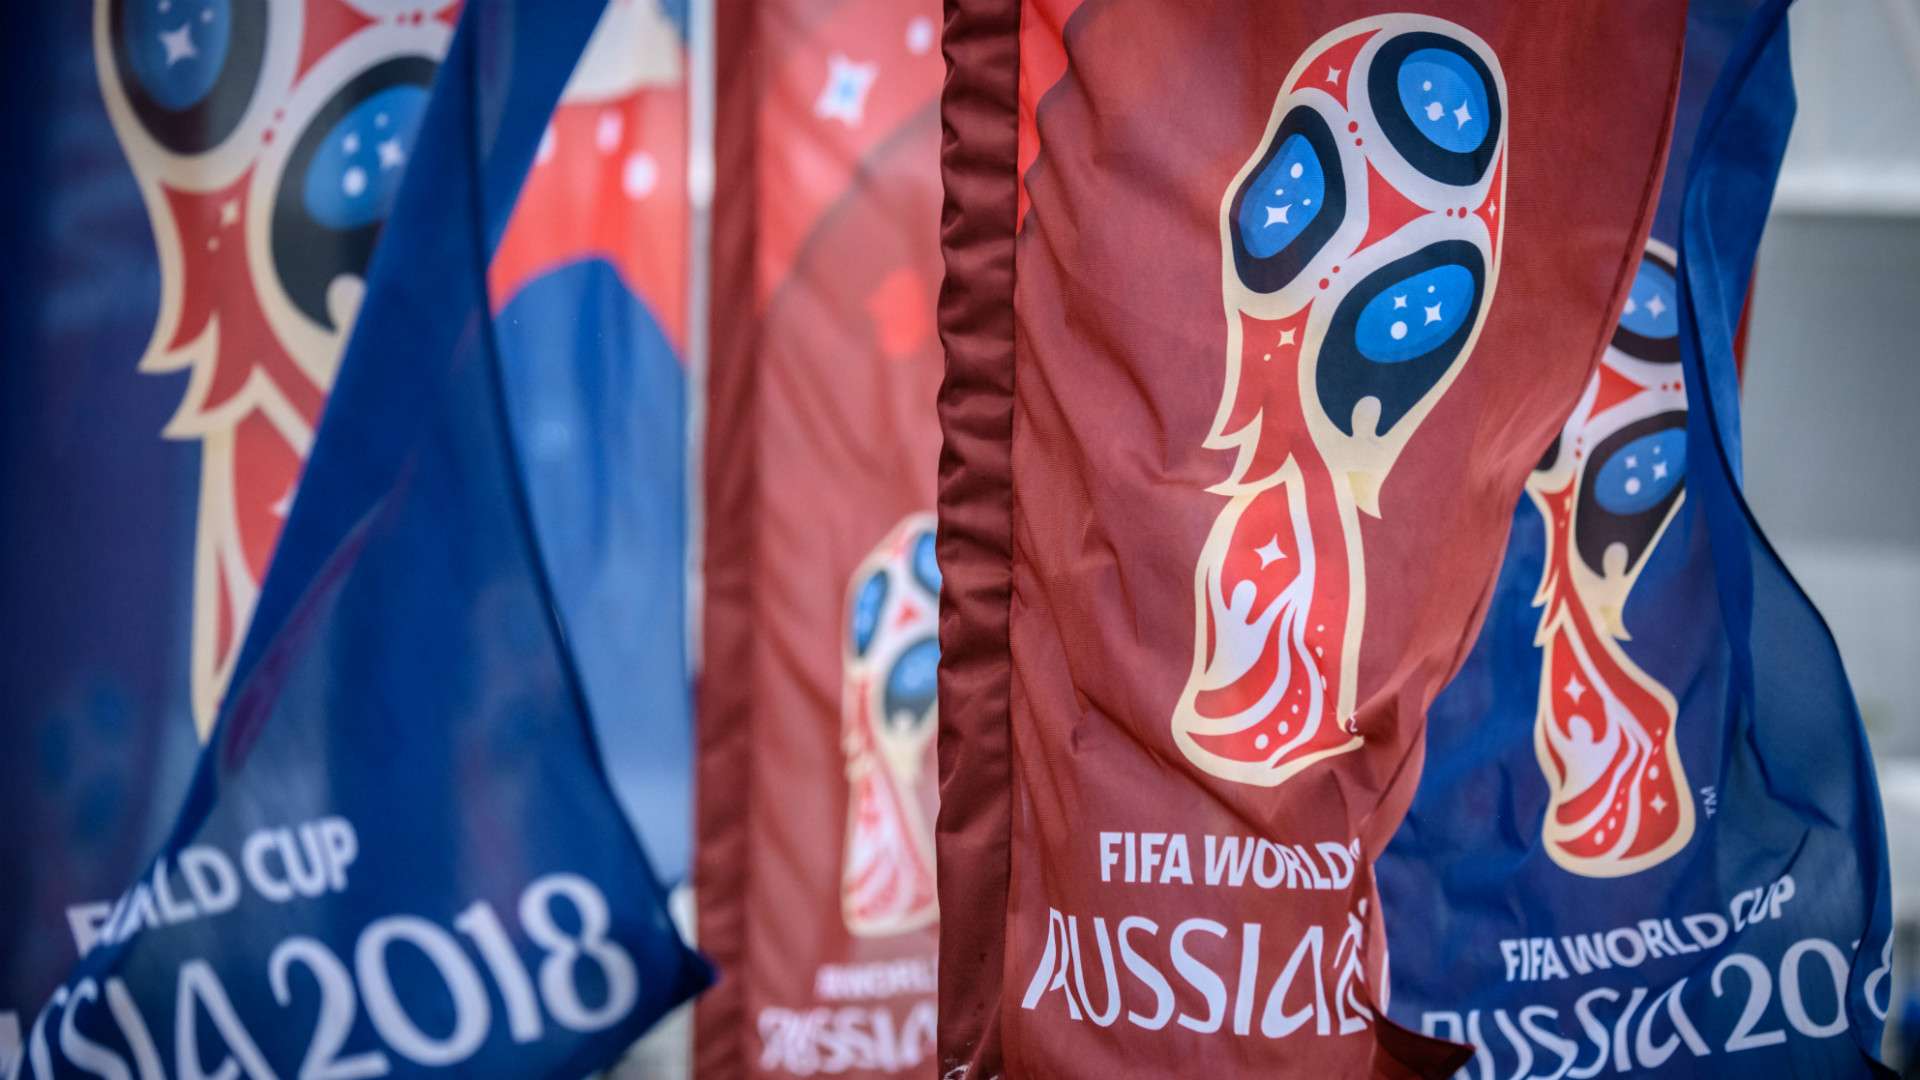 World Cup 2018 logo